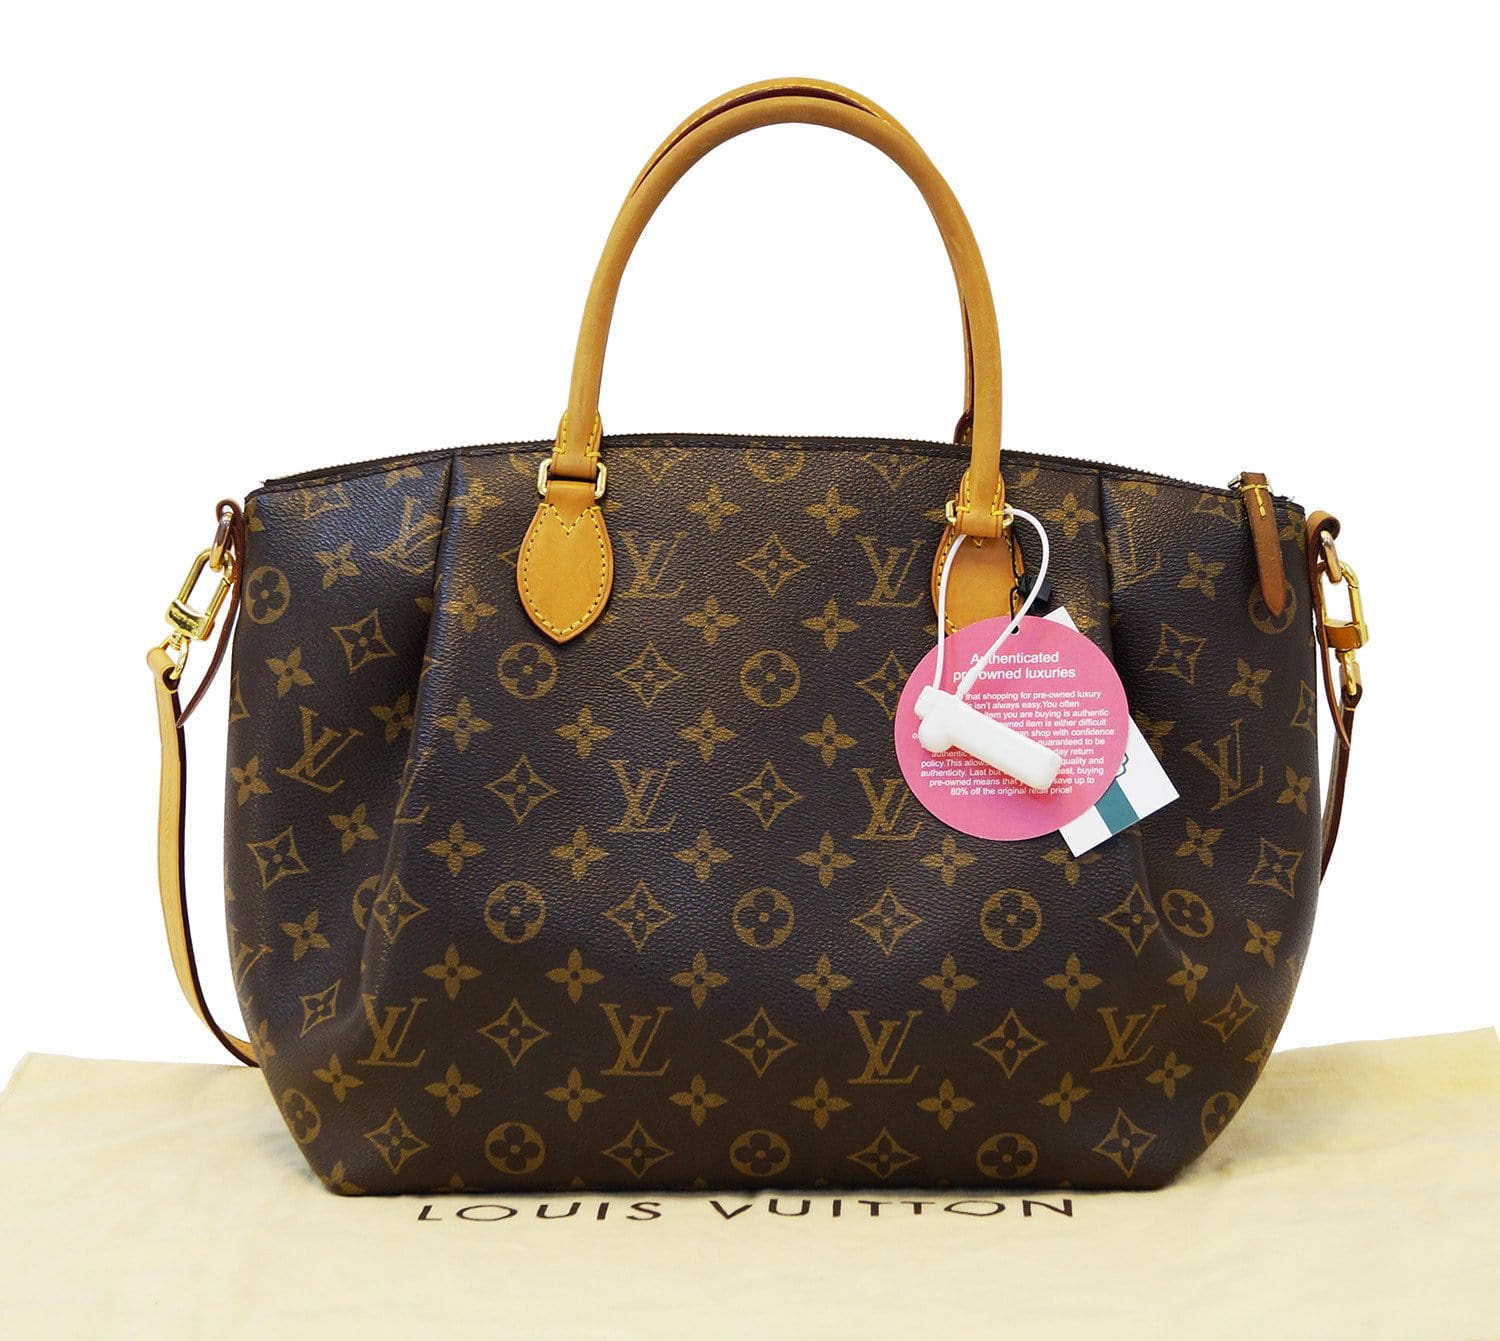 Handbag Reveal: Louis Vuitton Eva Clutch Monogram + How To Buy Pre Loved